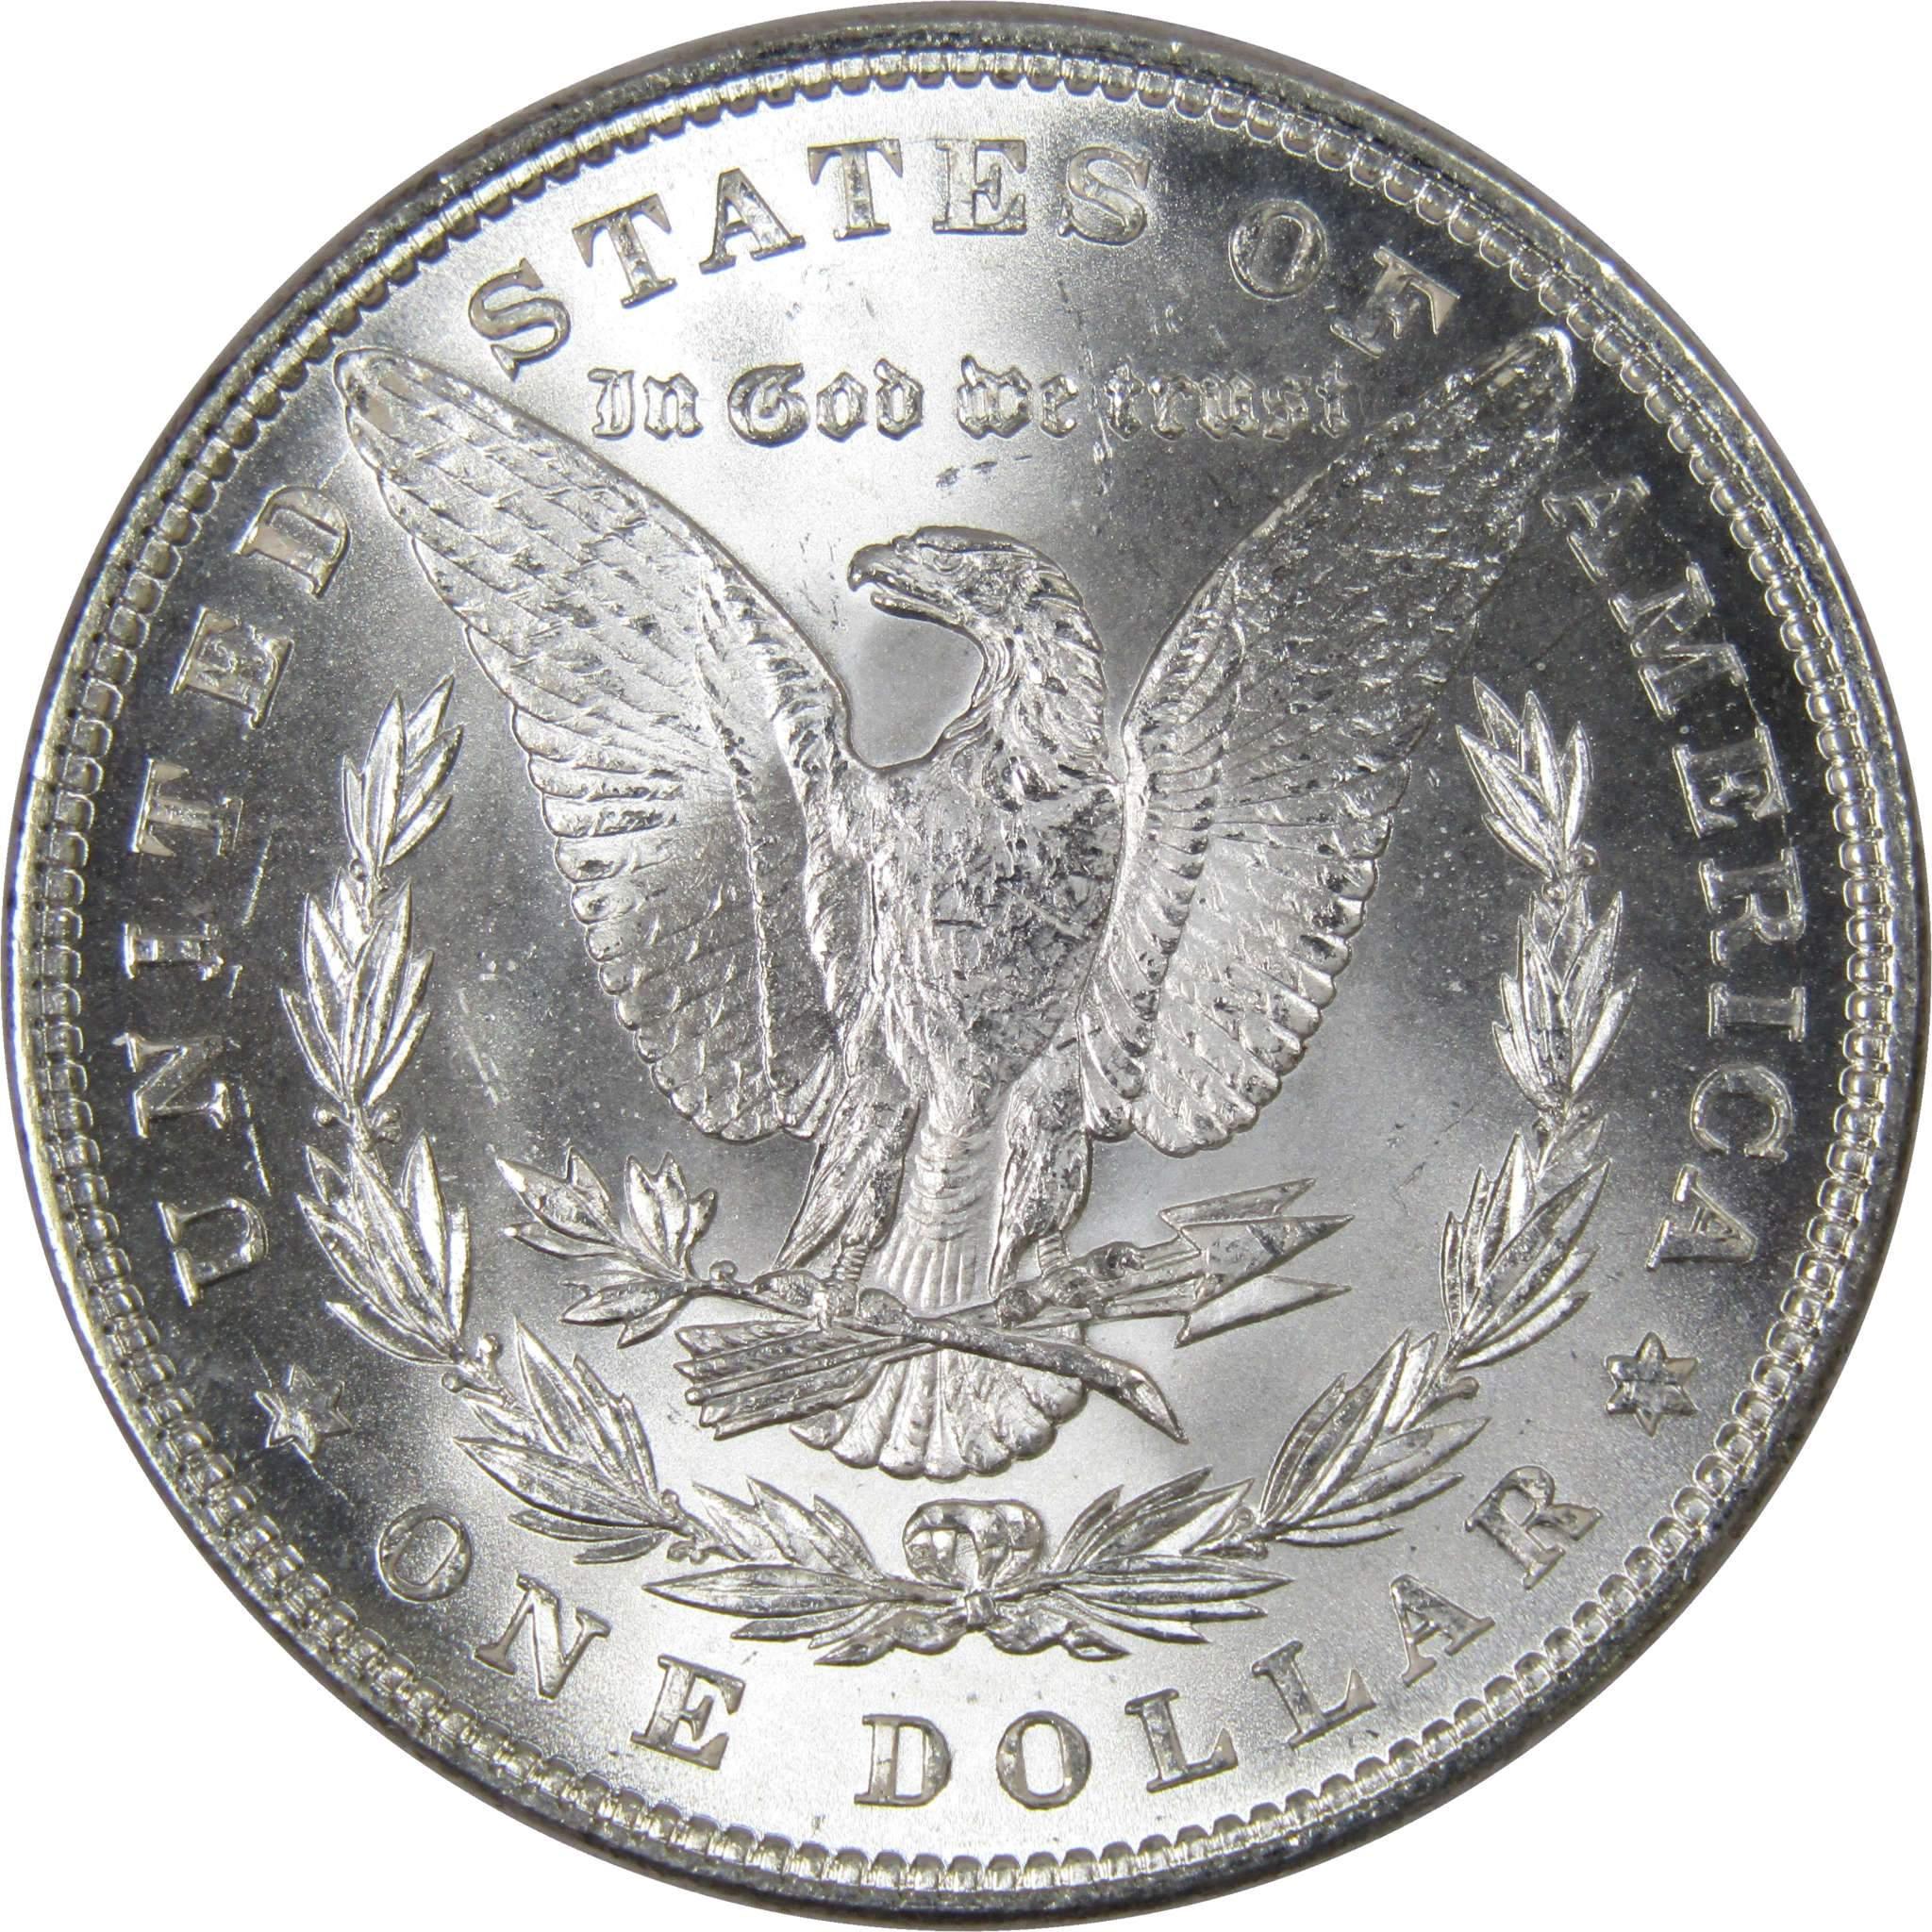 1885 Morgan Dollar BU Choice Uncirculated Mint State 90% Silver $1 US Coin - Morgan coin - Morgan silver dollar - Morgan silver dollar for sale - Profile Coins &amp; Collectibles